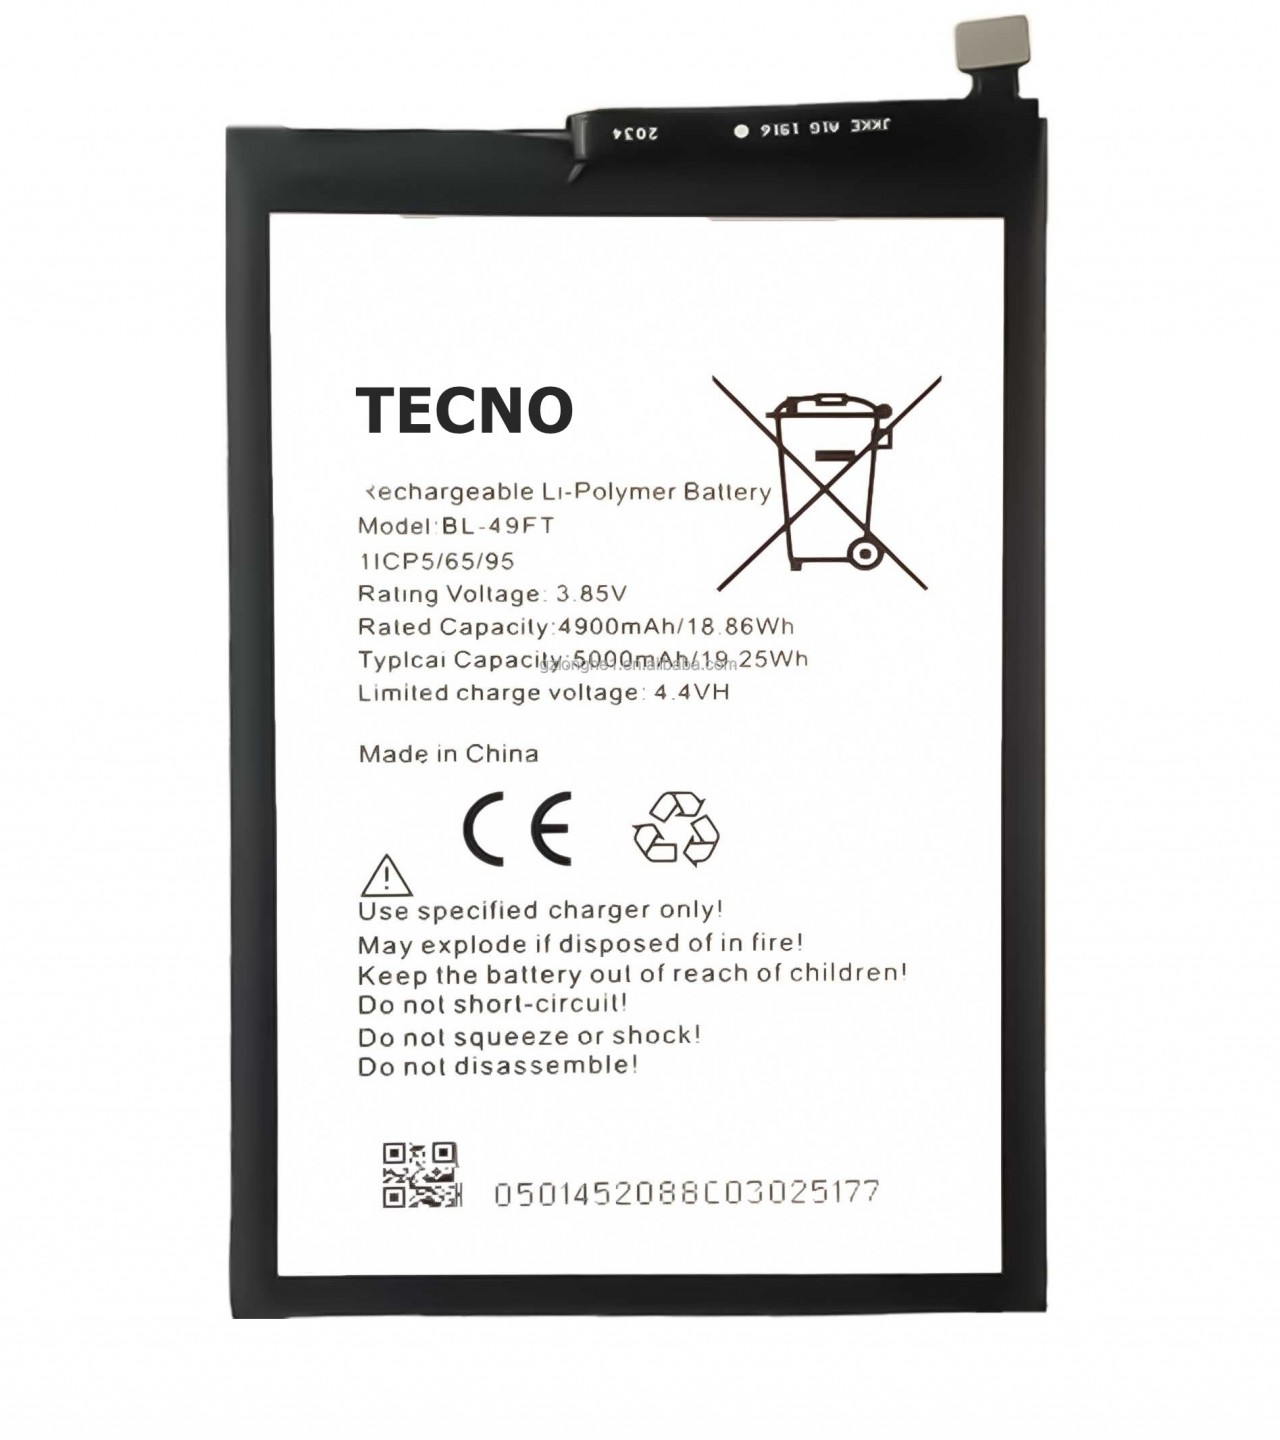 TECNO Spark 6 Go BL-49FT Battery with 5000mAh Capacity_Silver